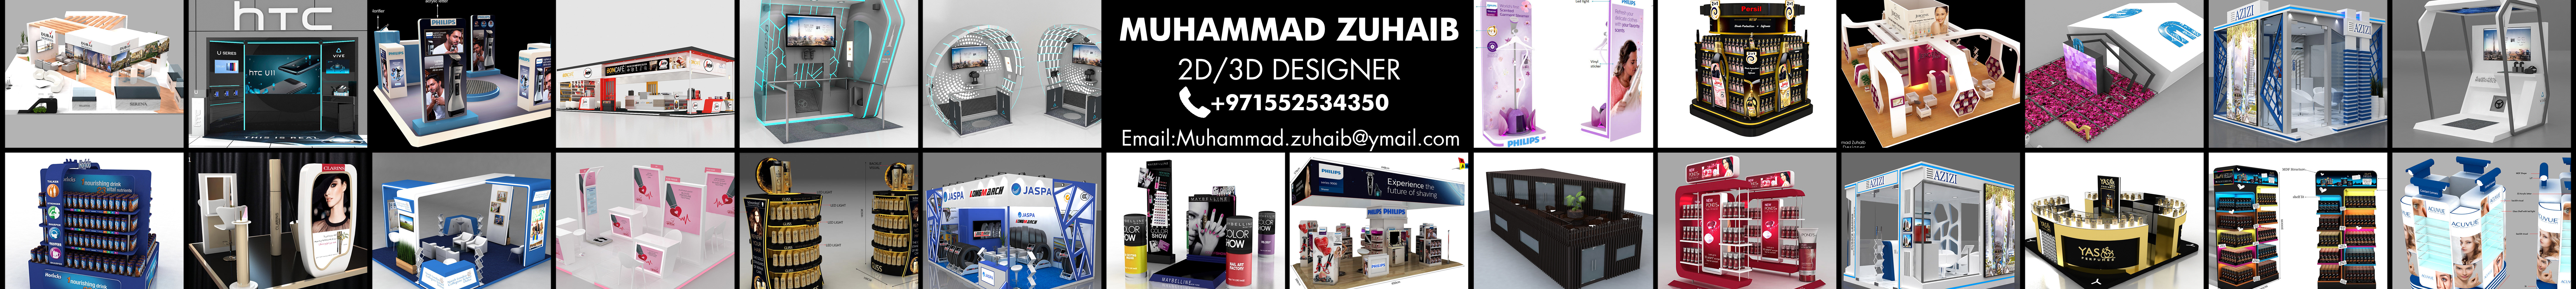 Muhammad Zuhaib's profile banner